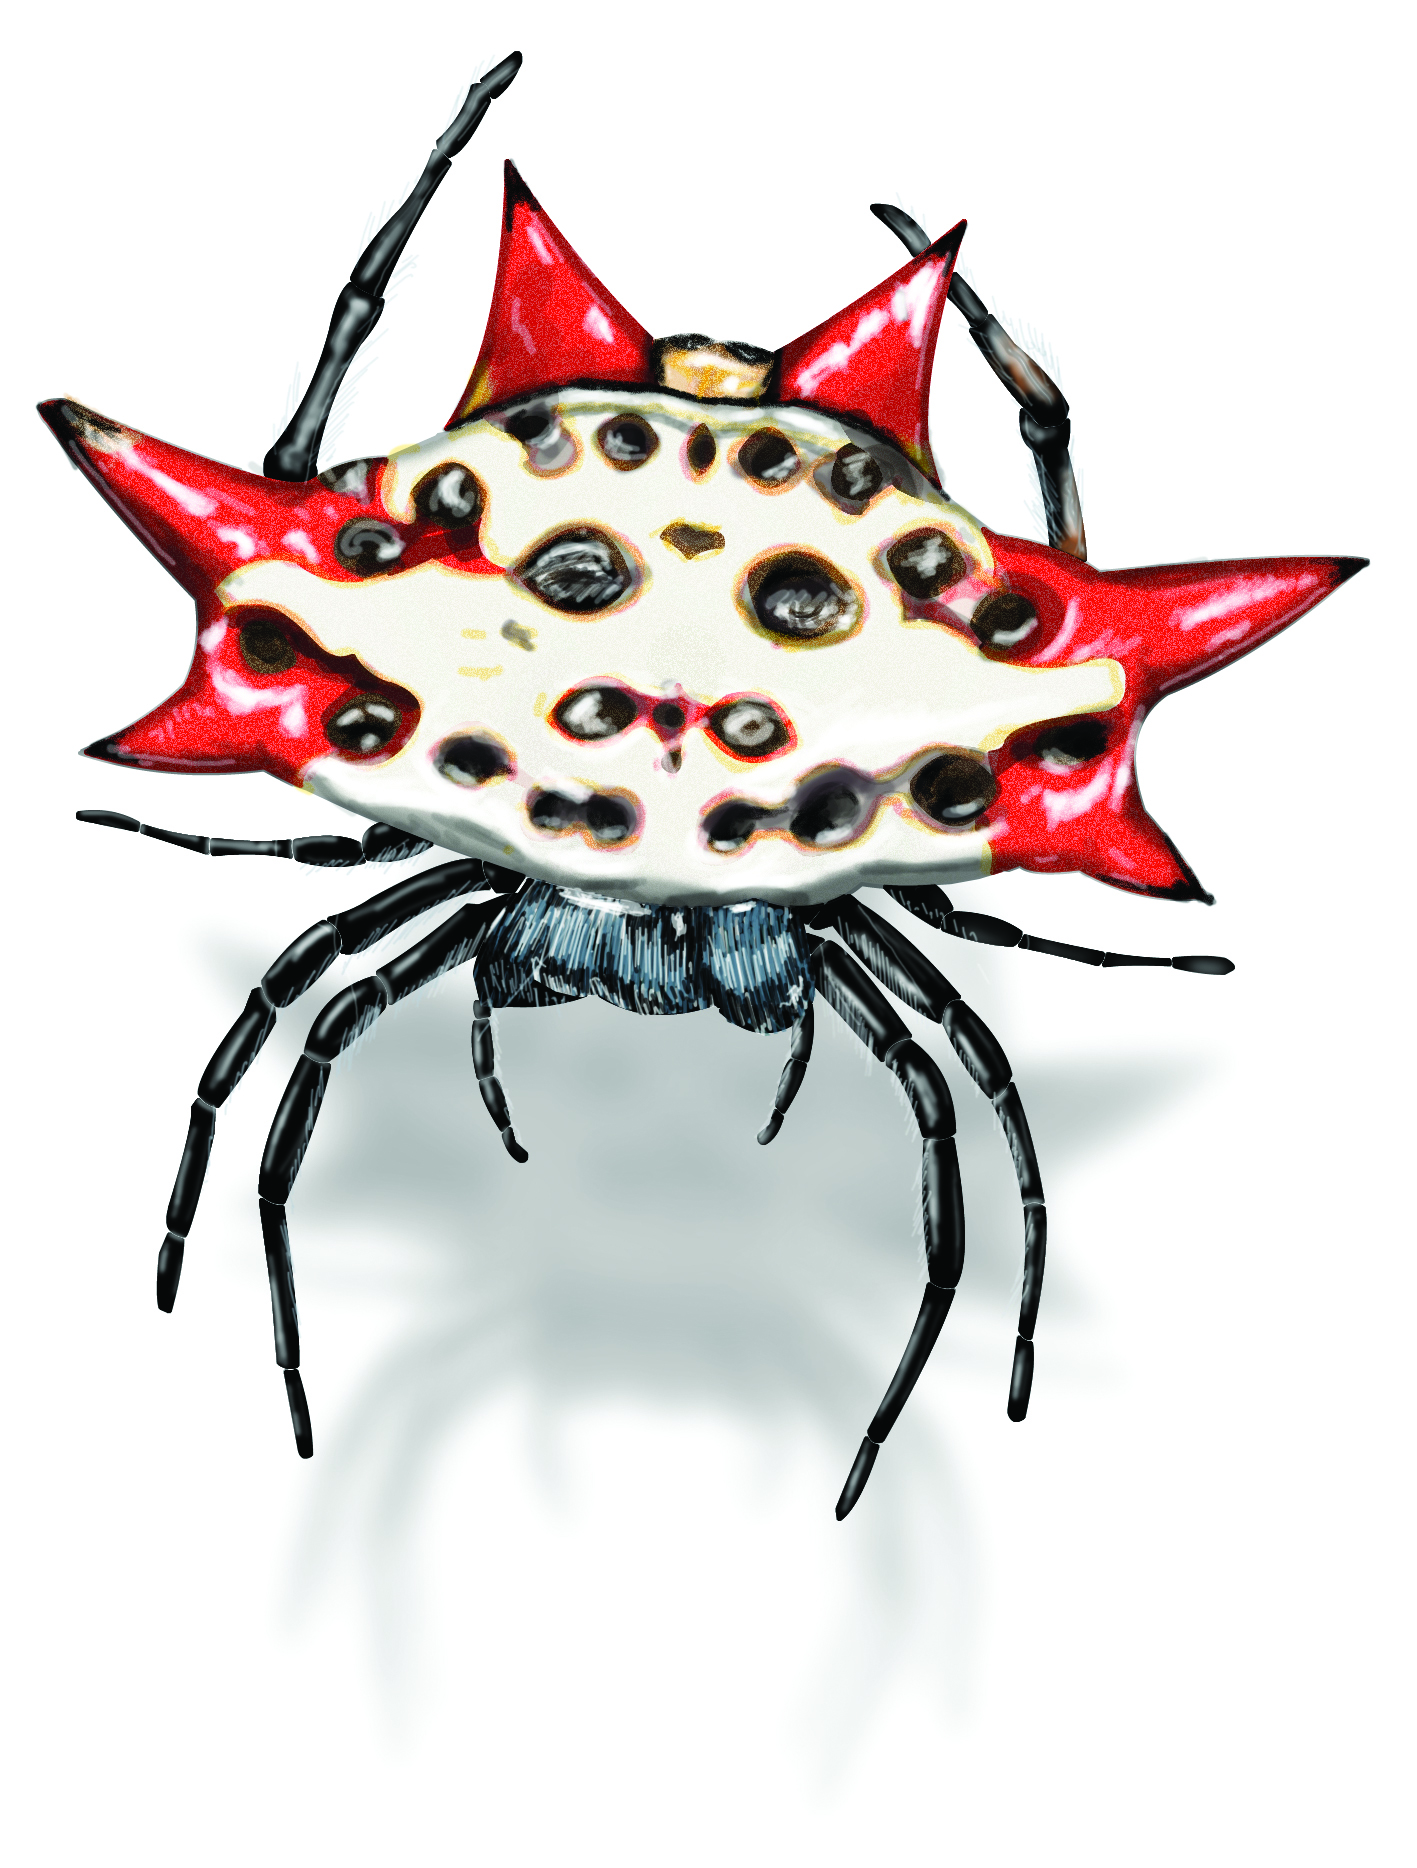 Thorny crab photo